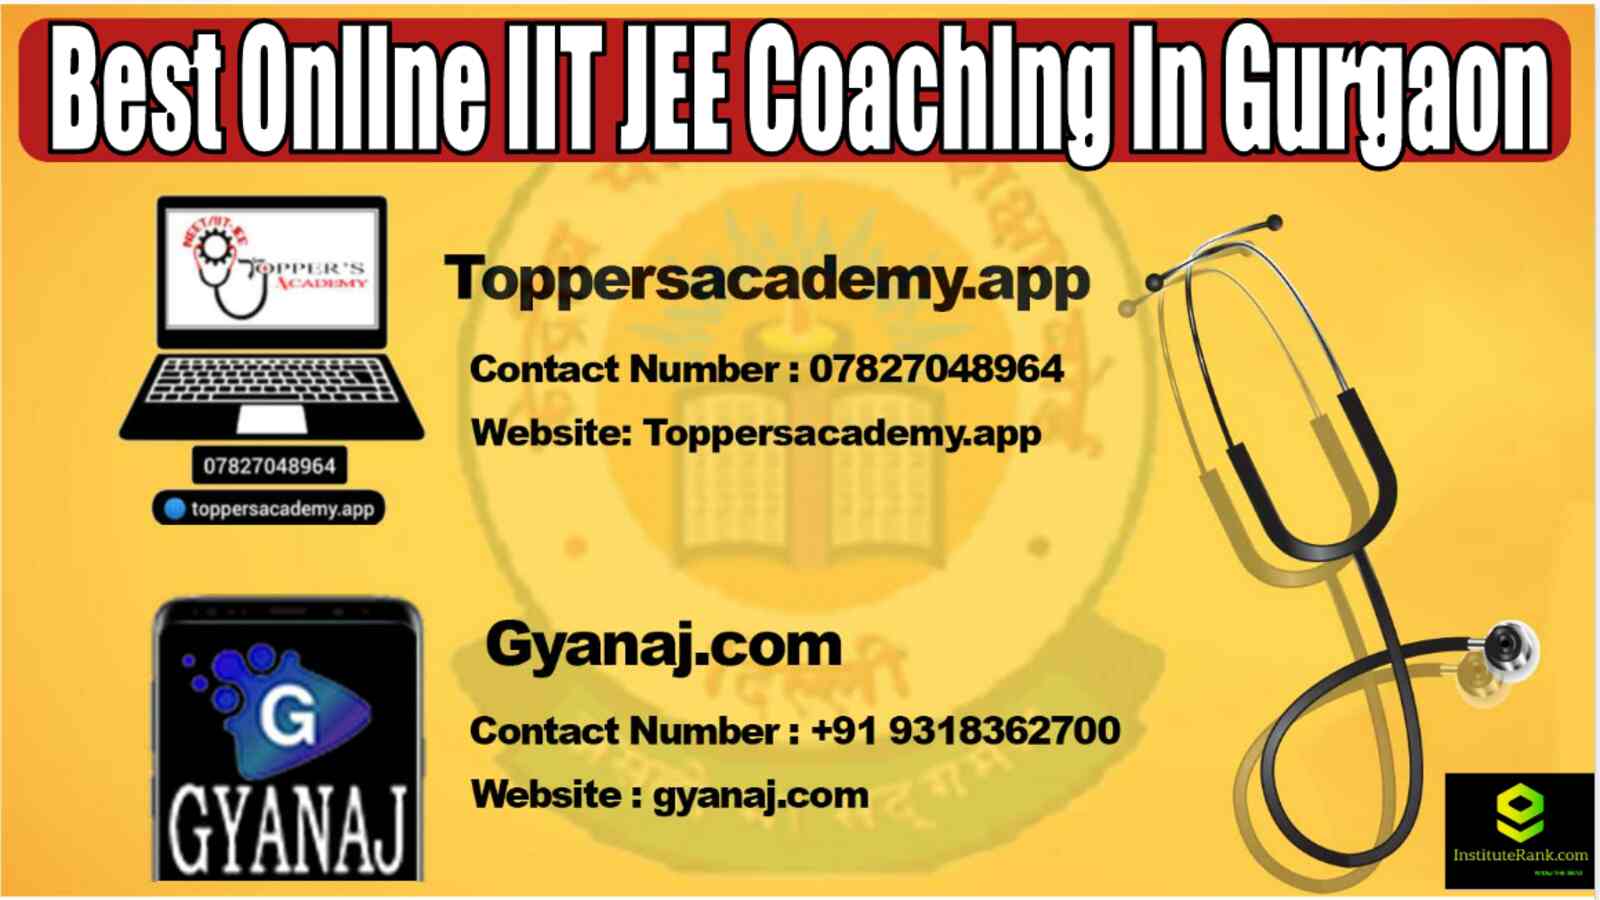 Best Online IIT JEE Coaching in Gurgaon 2022